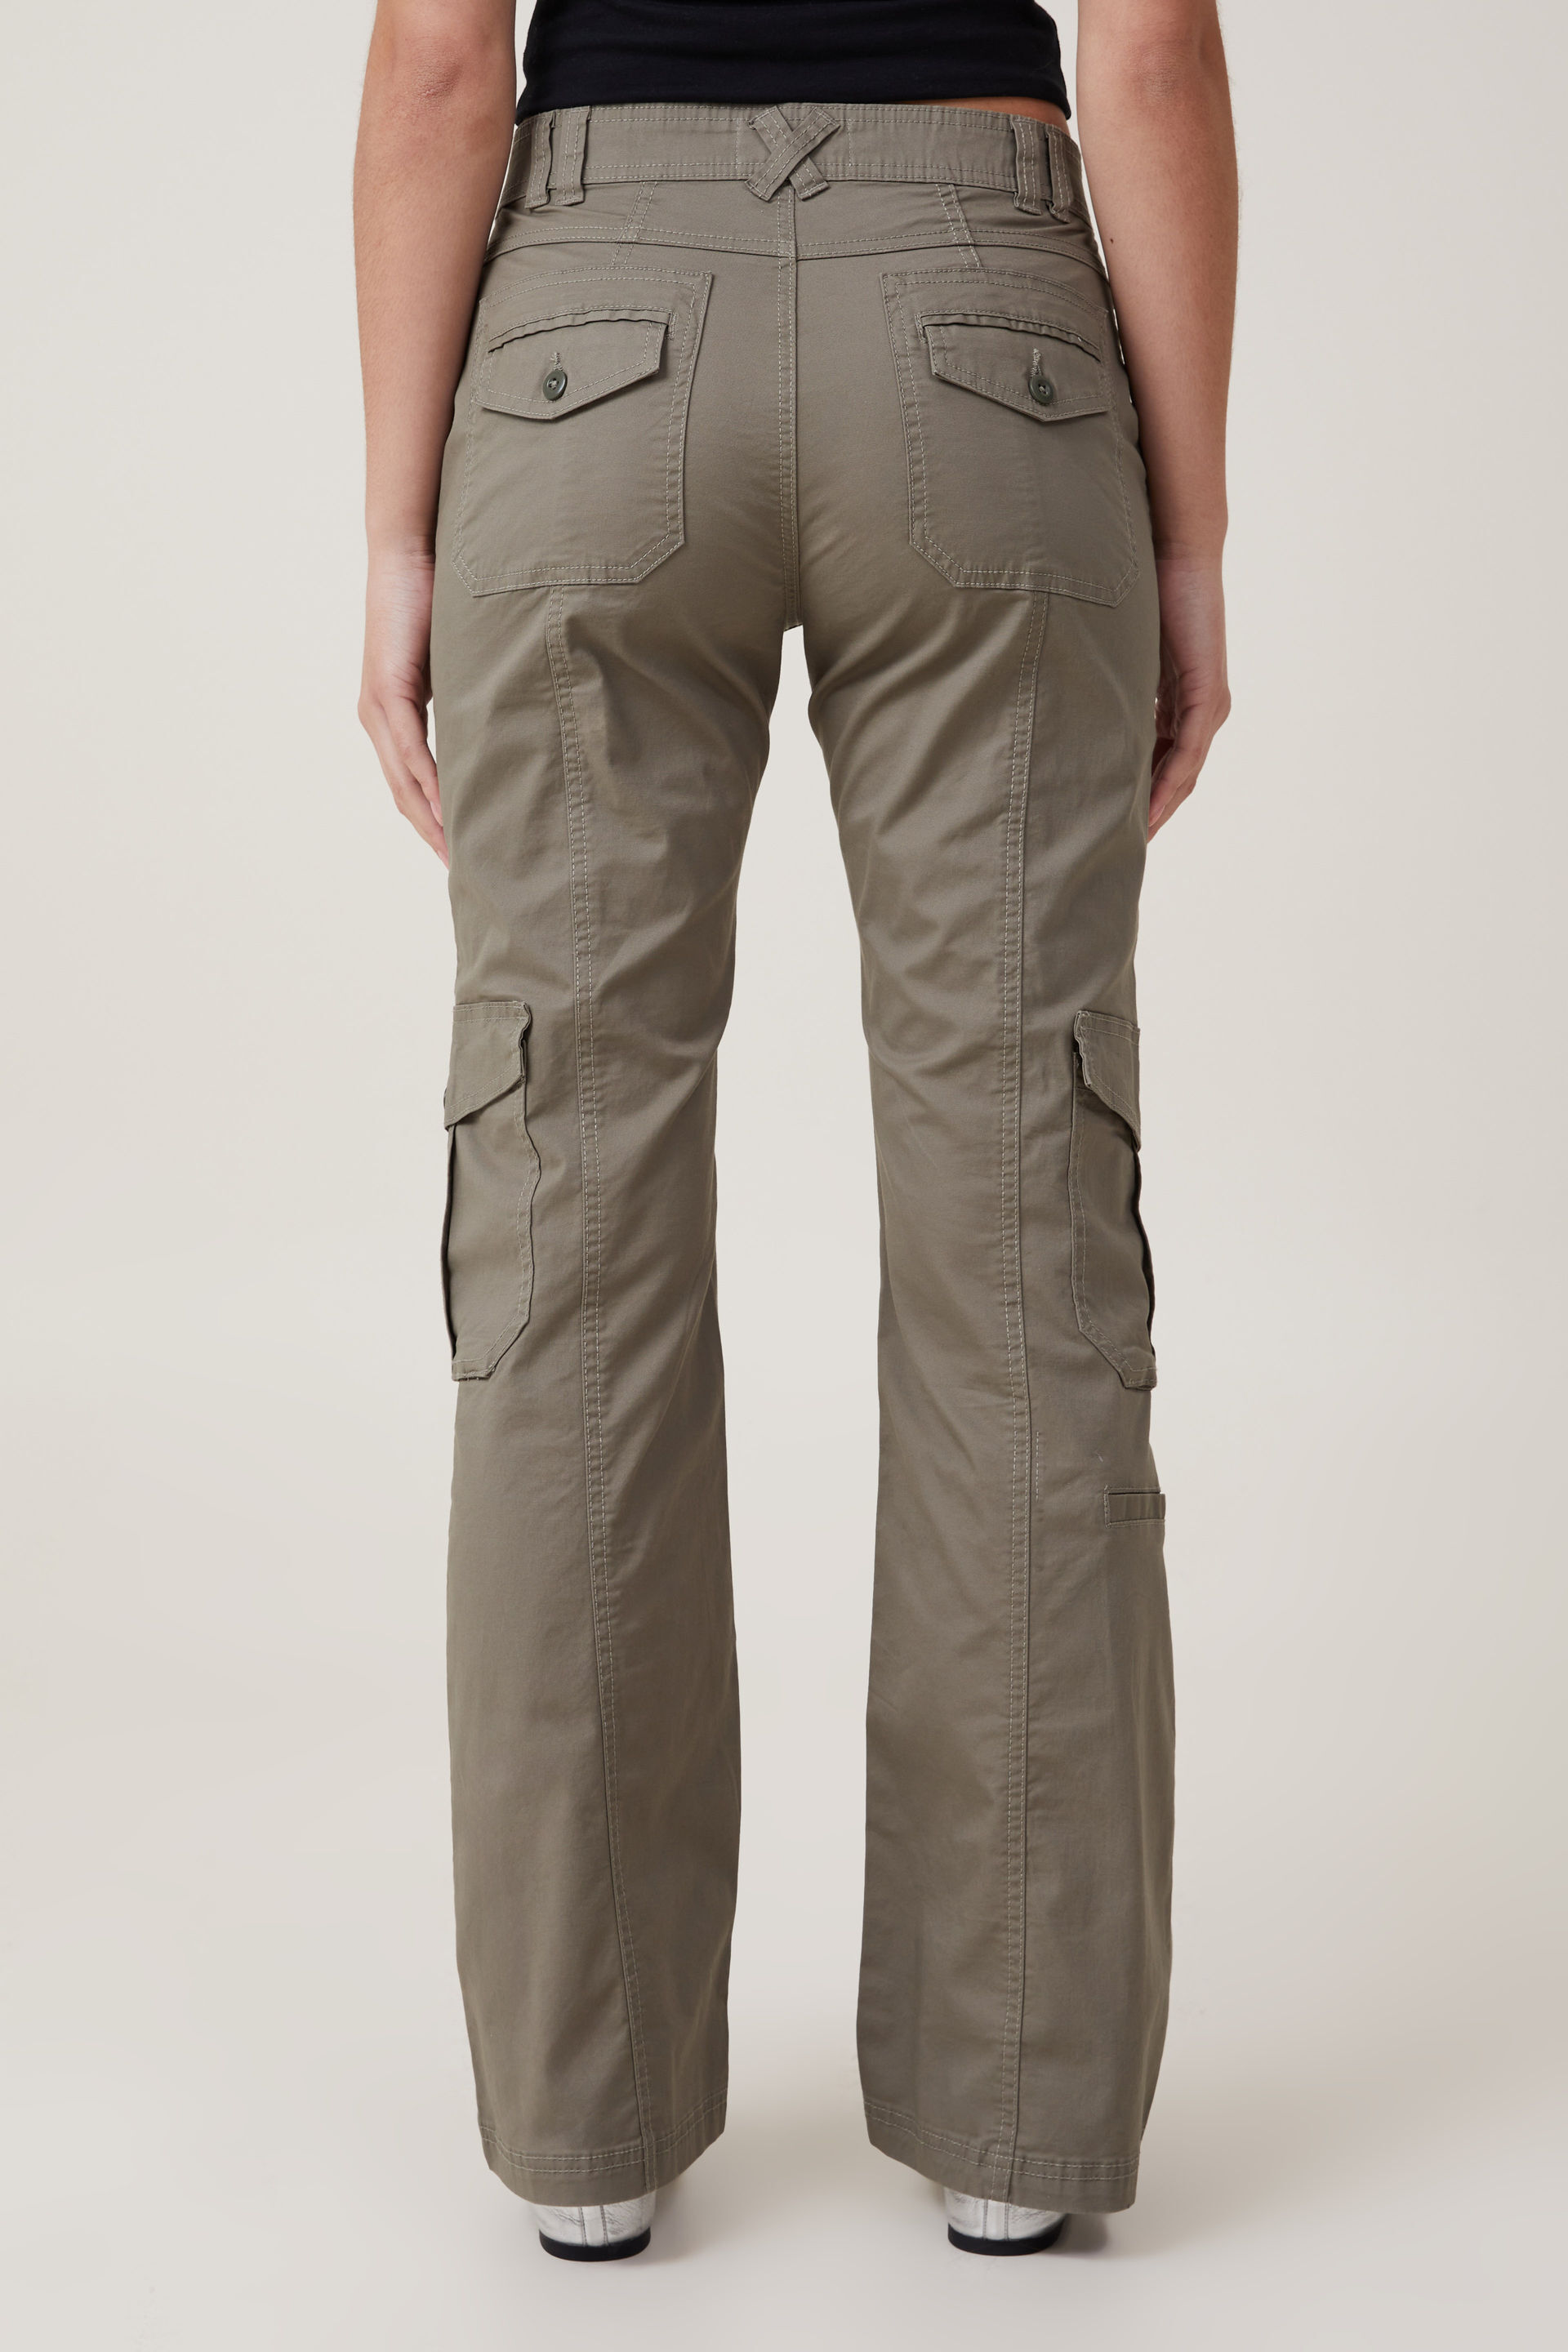 Buy Mens Cargo Trousers & Beige Cargo Pants Mens - Apella